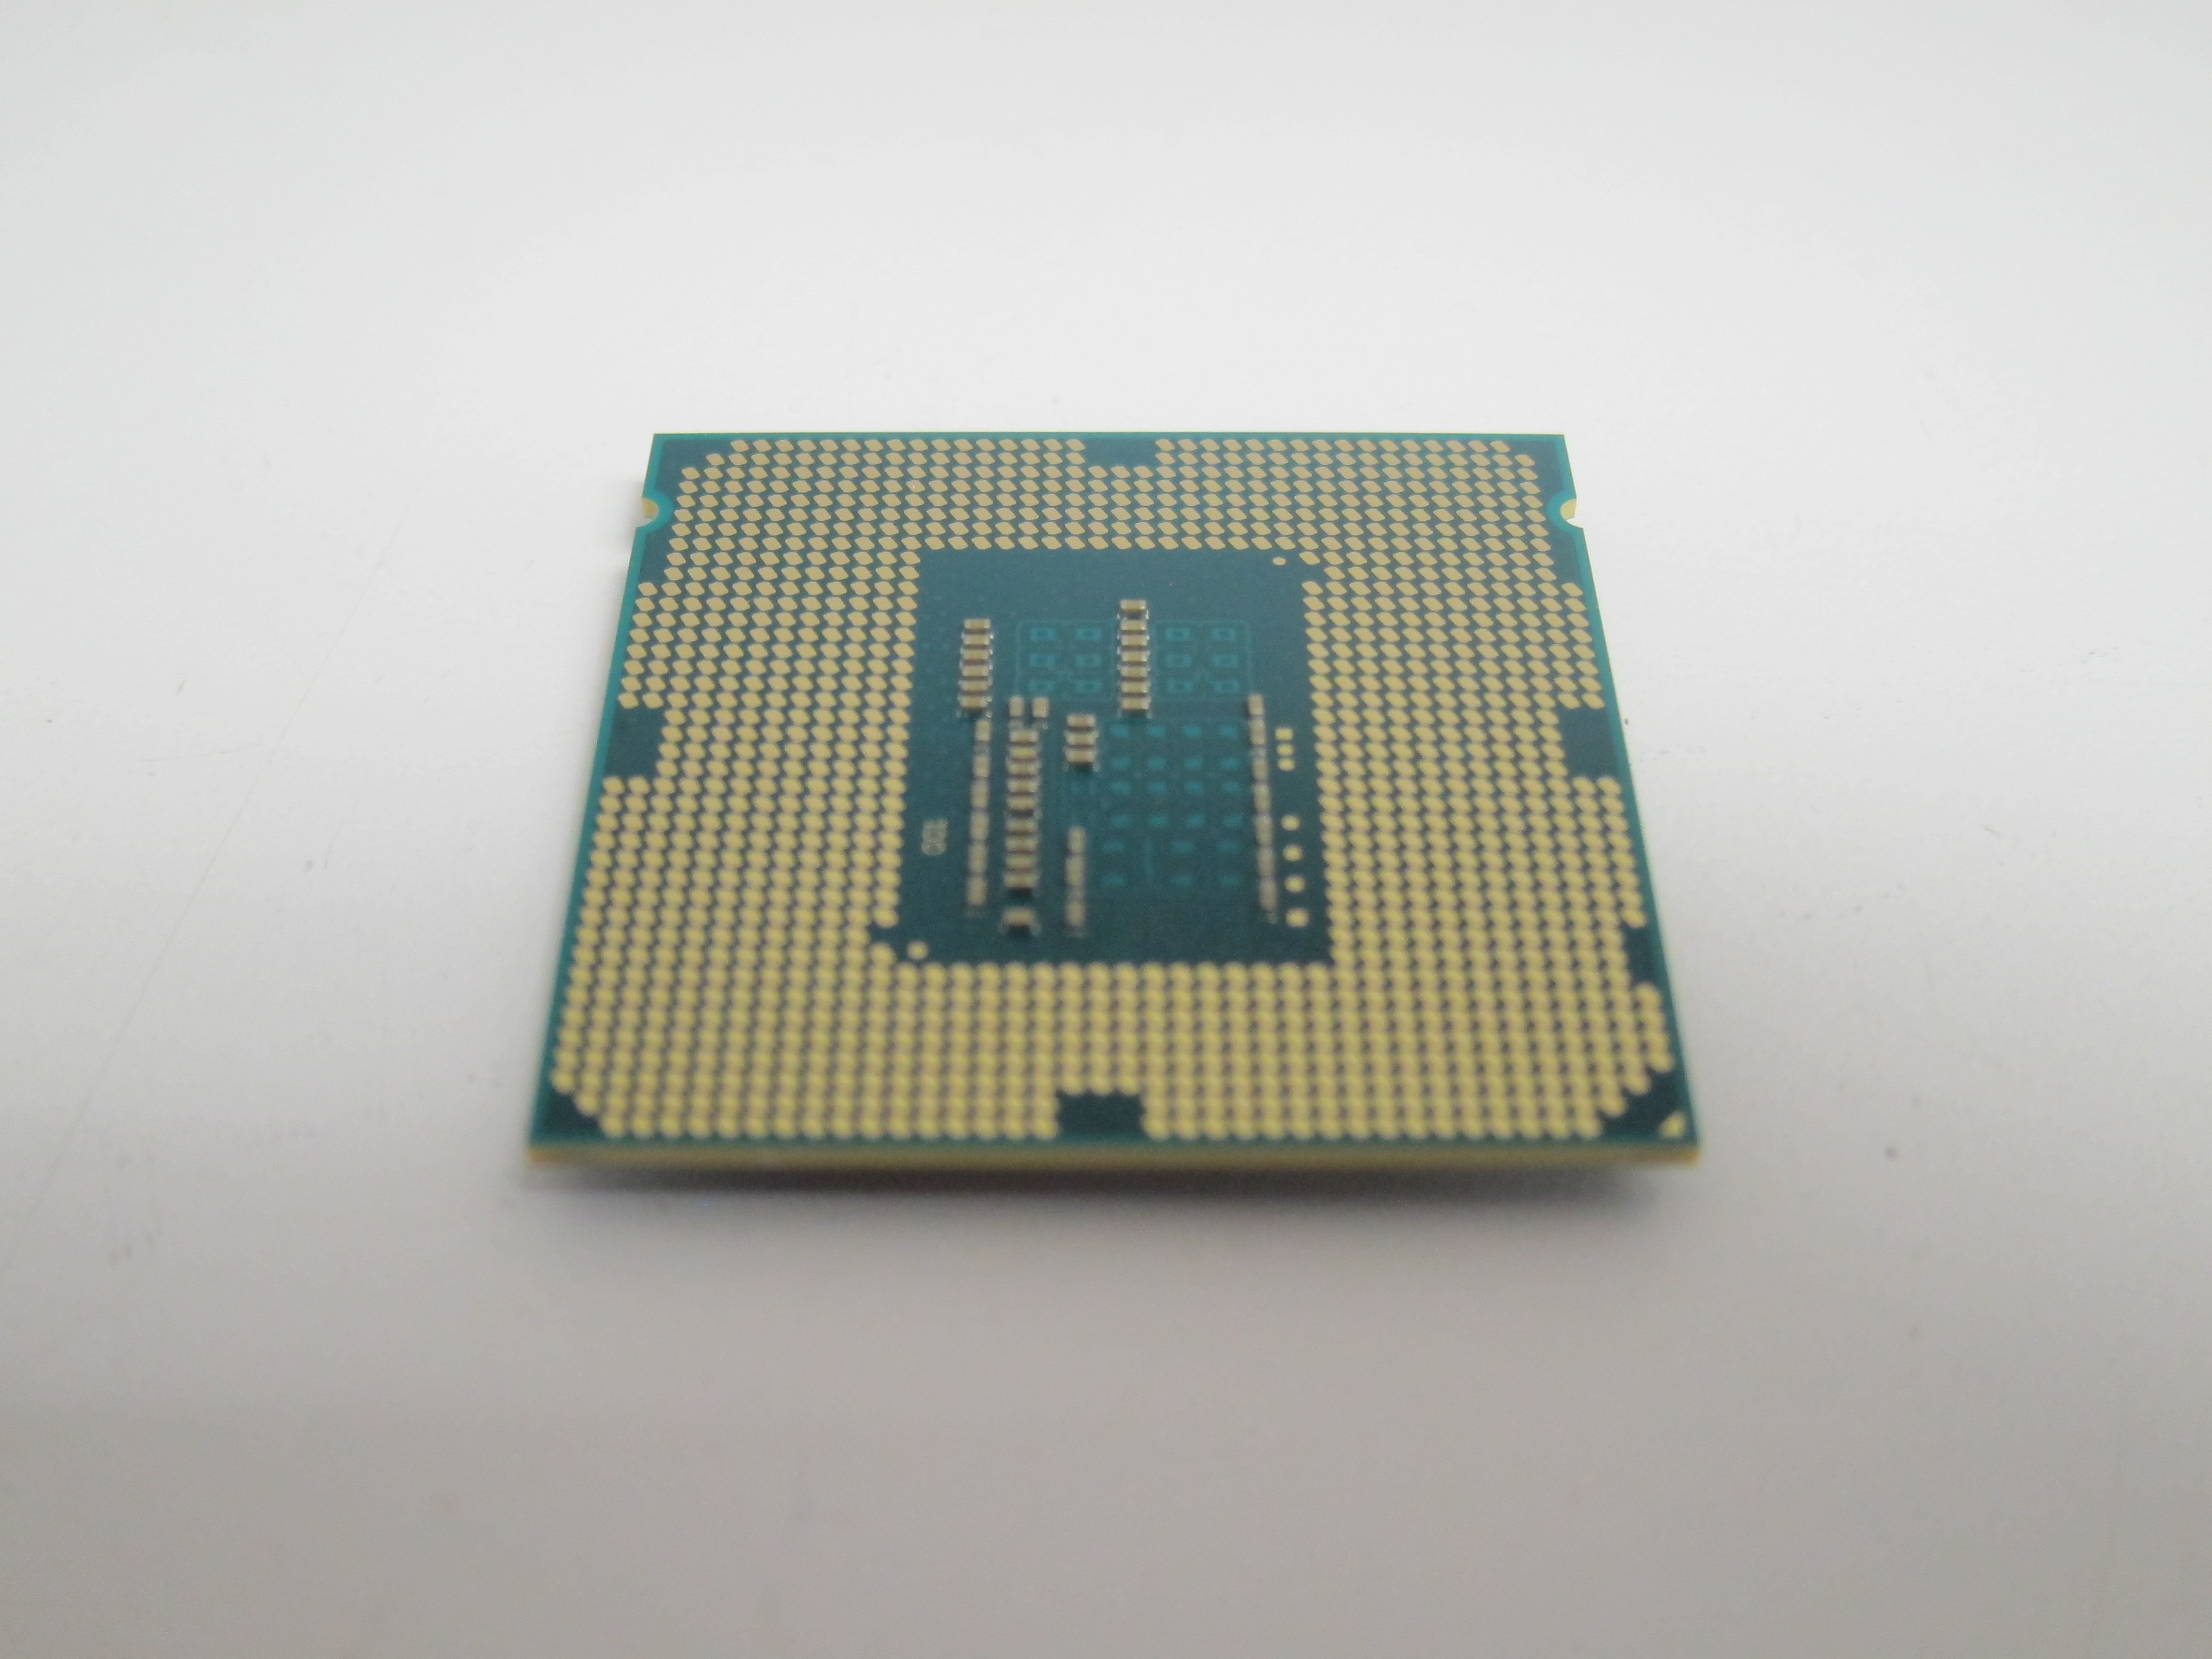 Intel Pentium G32 3 00ghz Dual Core Processor Lga 1150 Sr1cg Ebay